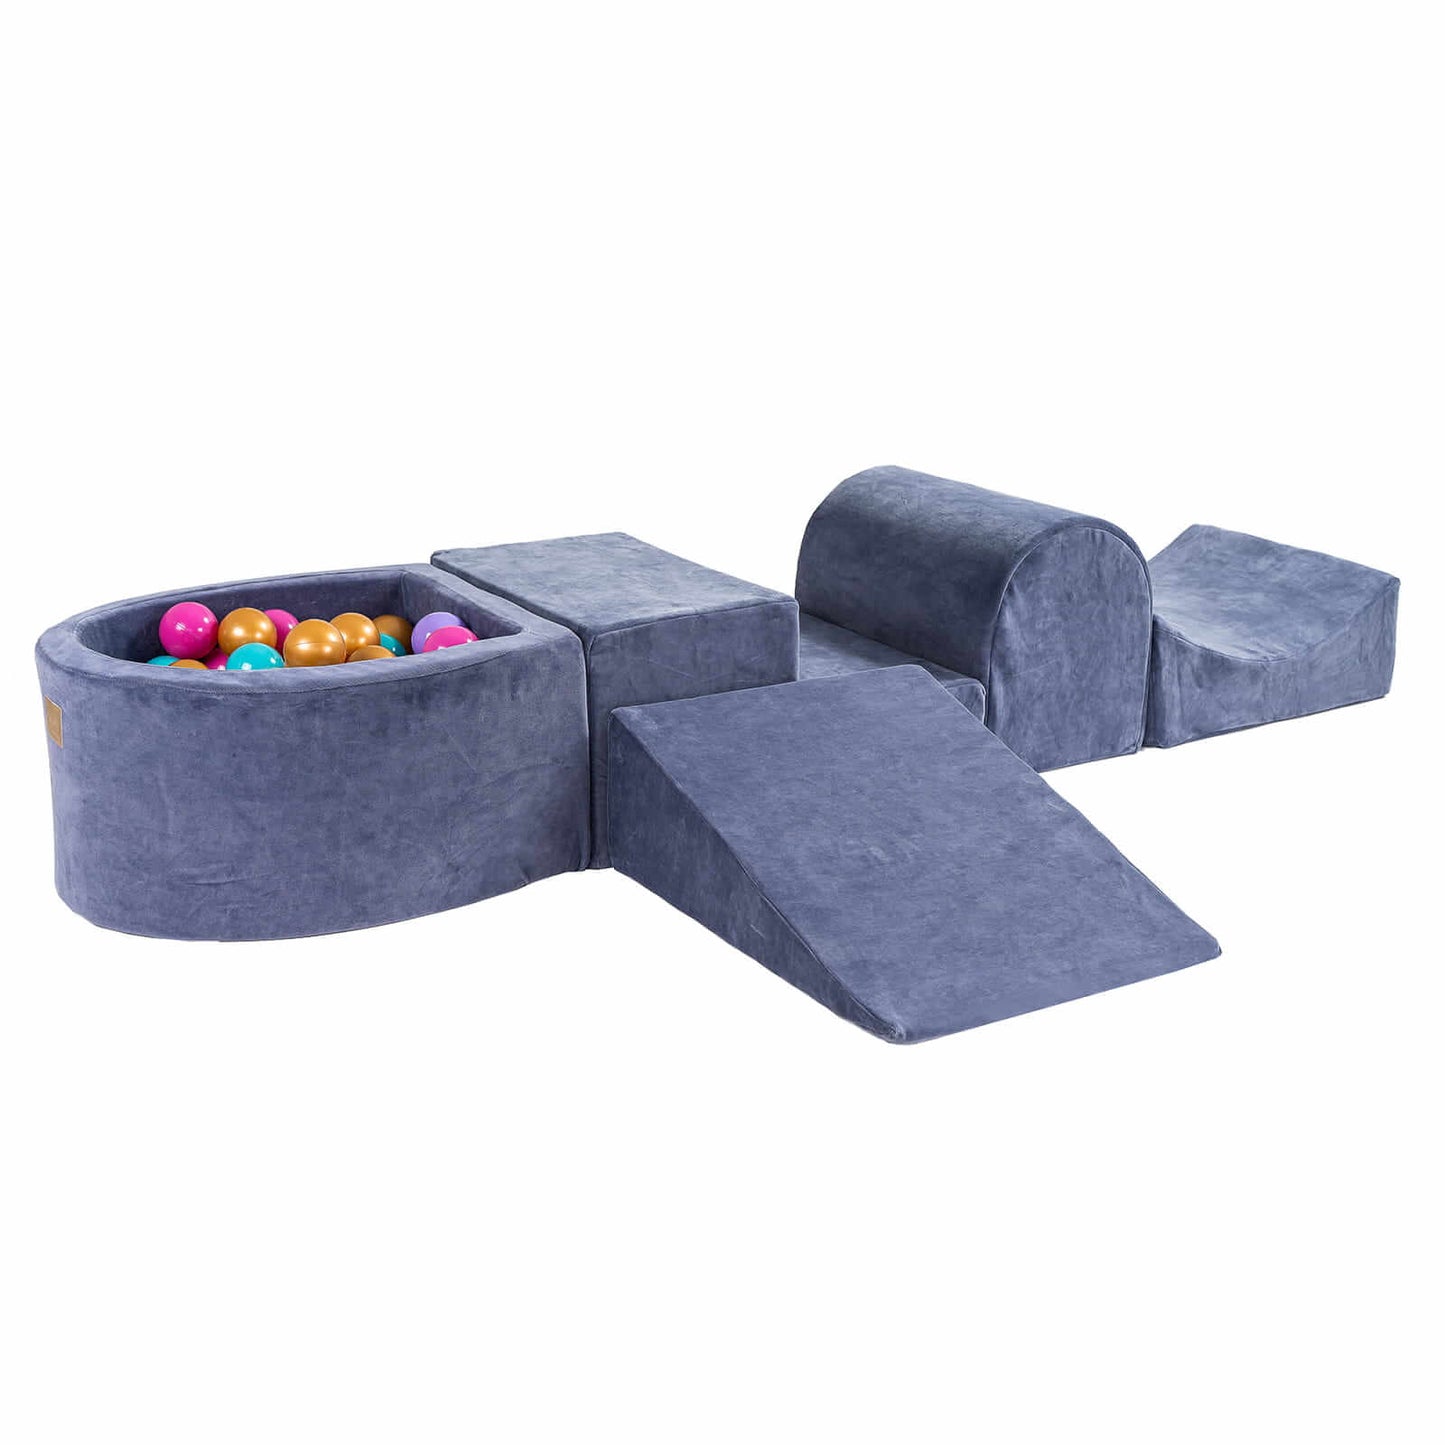 MeowBaby® Foam Play Set with Mini Ball Pit + 100 Balls, Grey-Blue